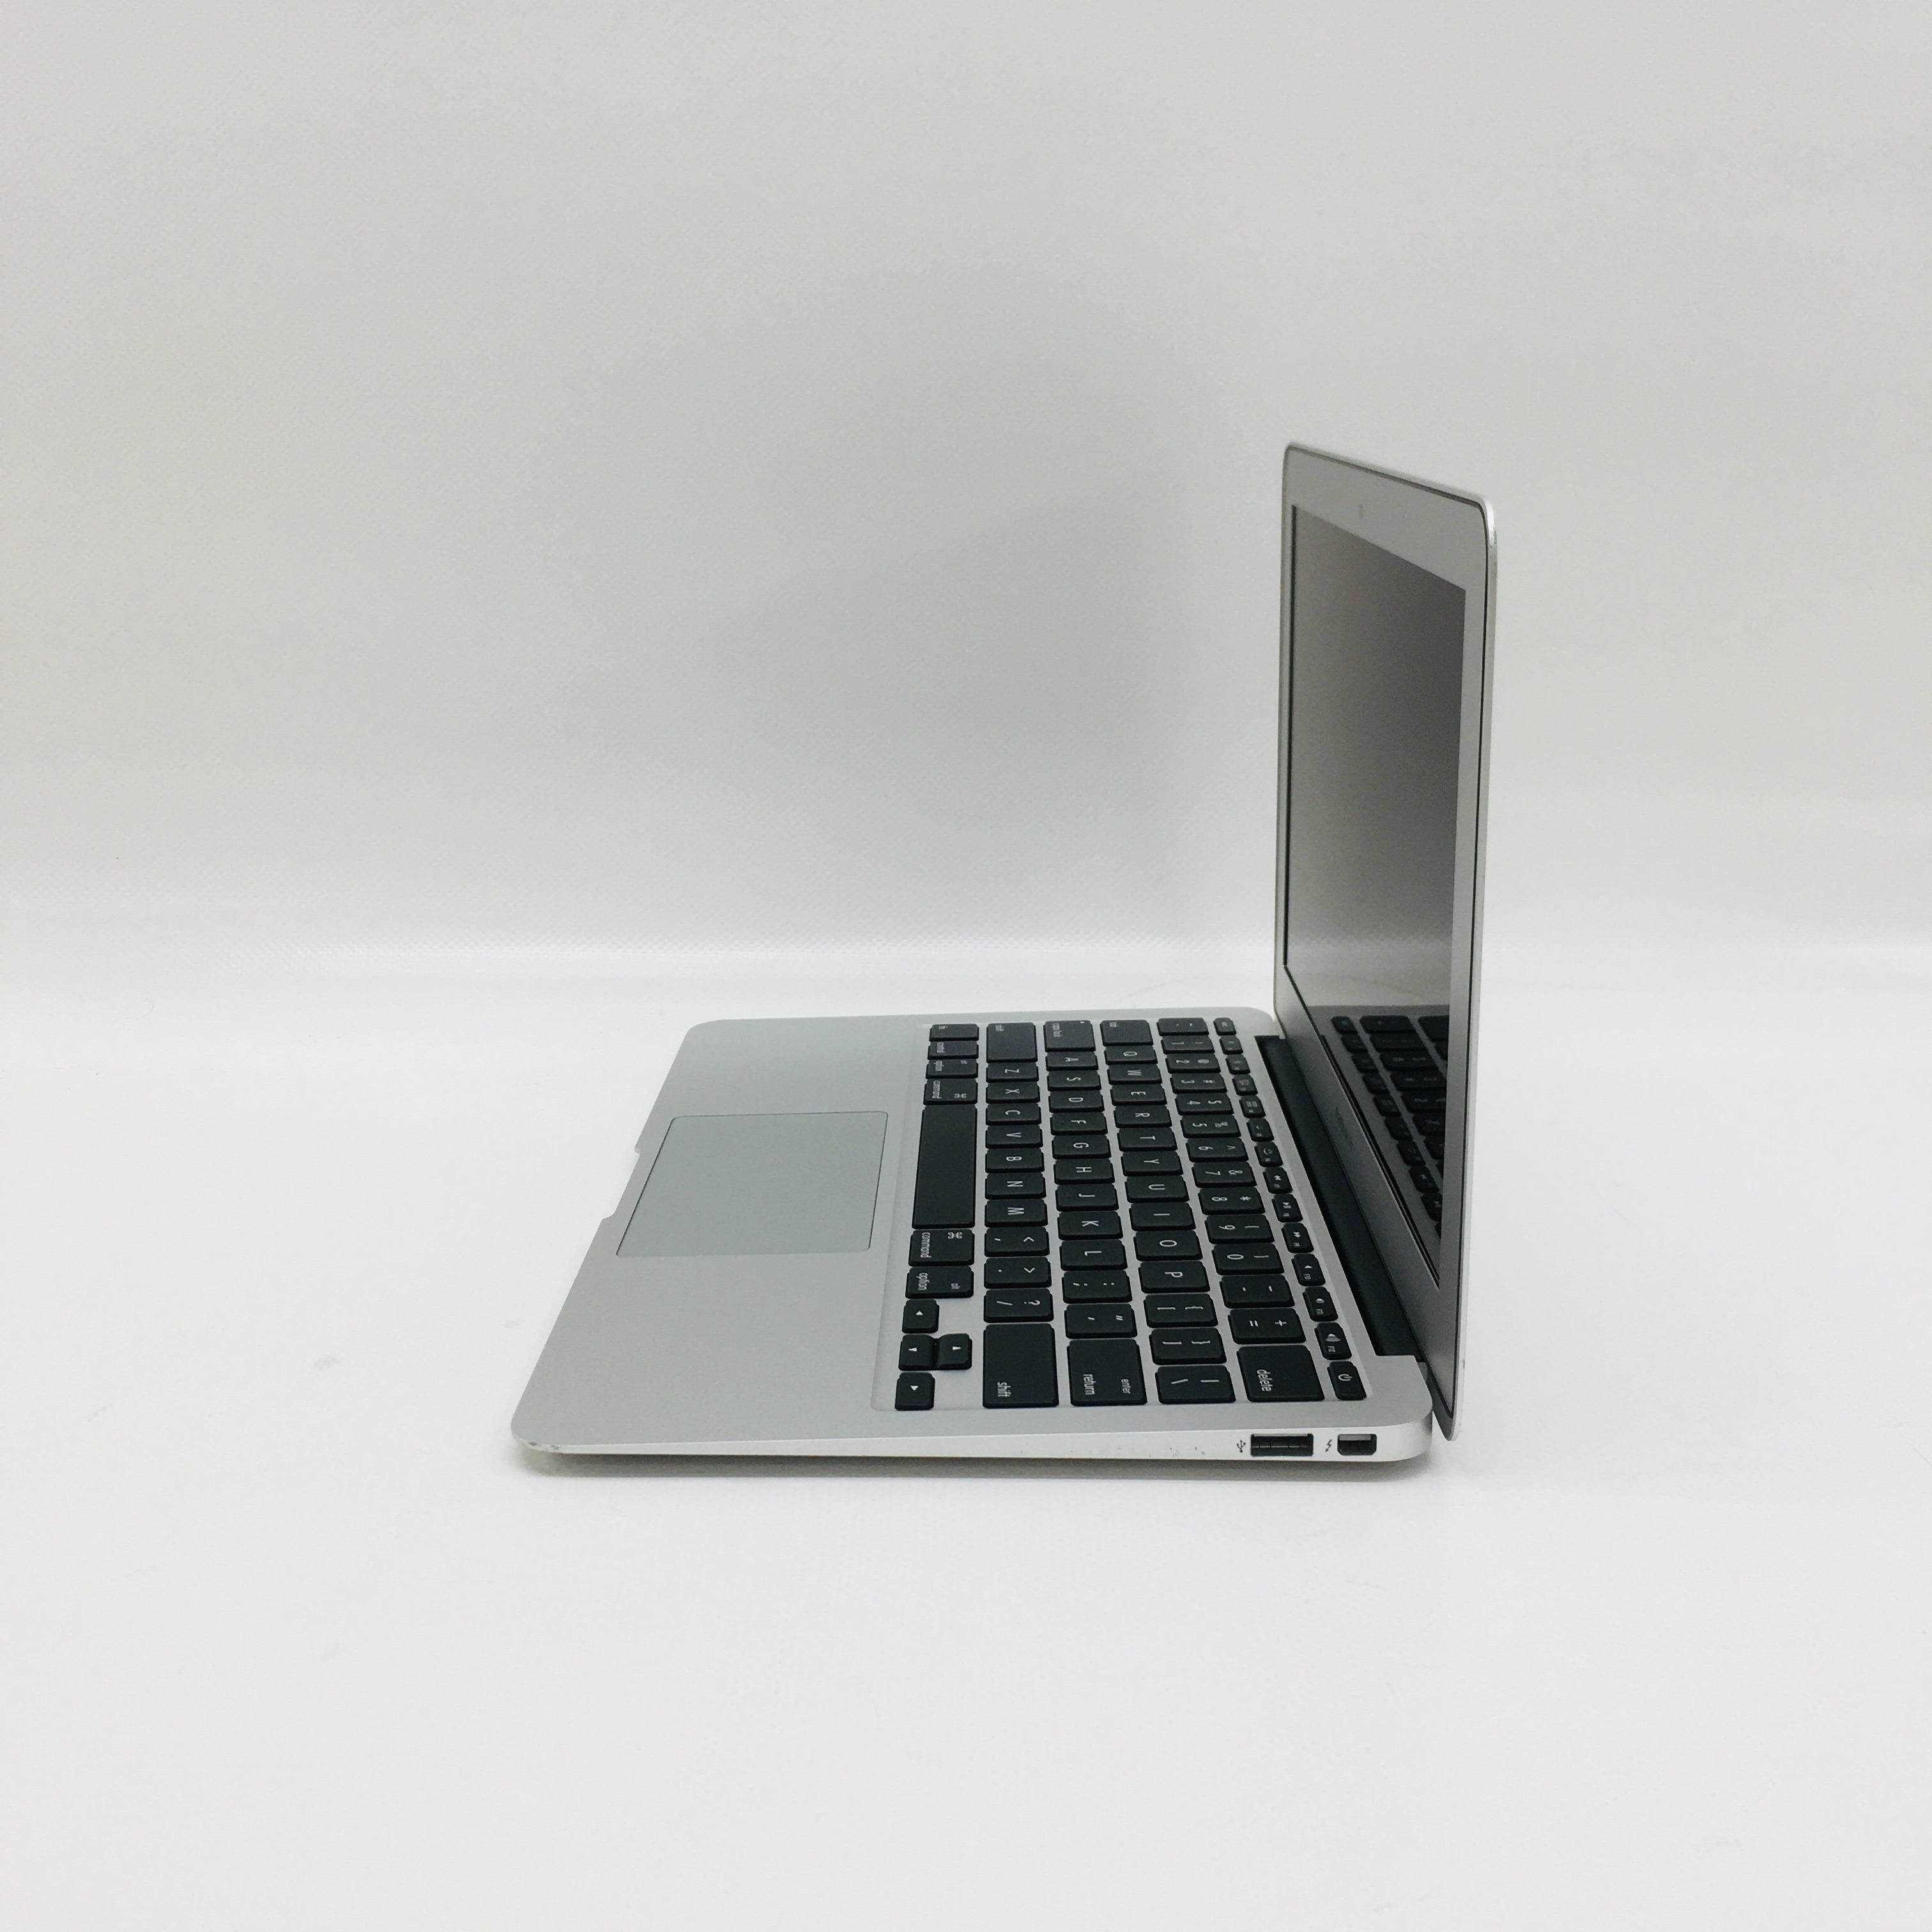 MacBook Air 11" Early 2015 (Intel Core i5 1.6 GHz 4 GB RAM 128 GB SSD), Intel Core i5 1.6 GHz, 4 GB RAM, 128 GB SSD, image 3